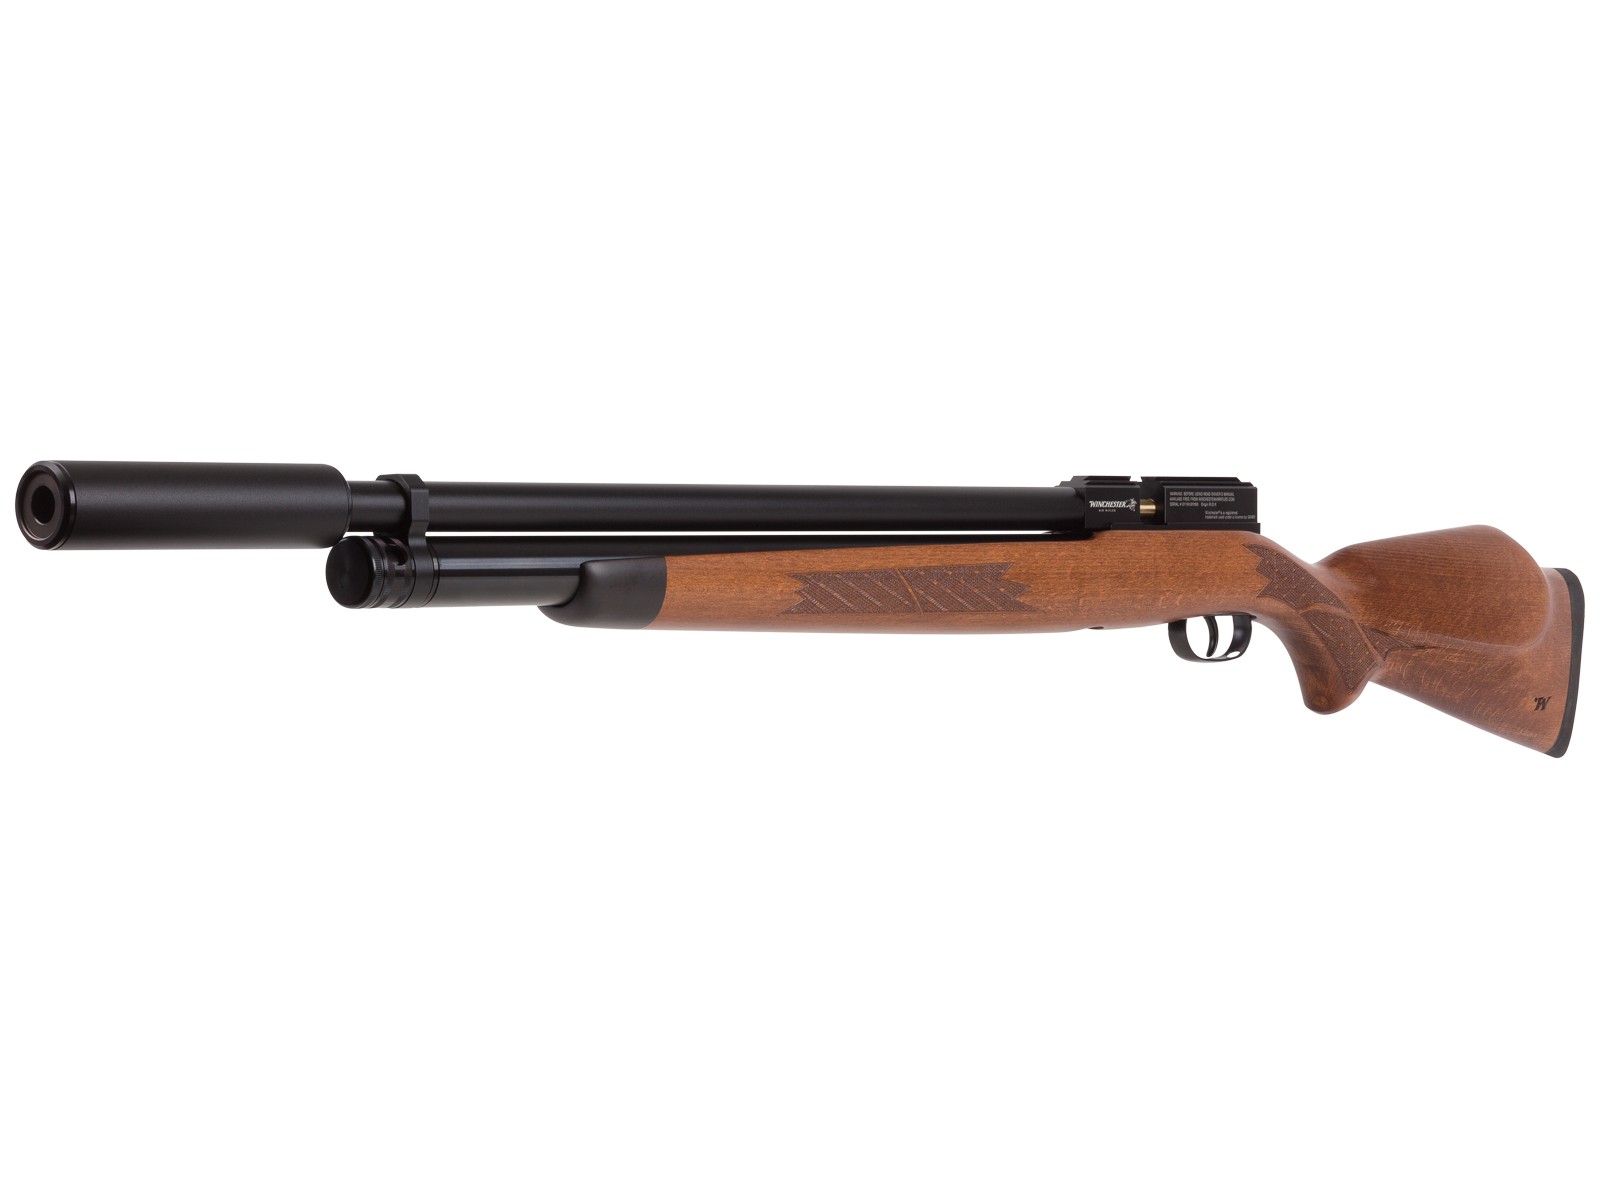 Winchester Big Bore Air Rifle Model 70